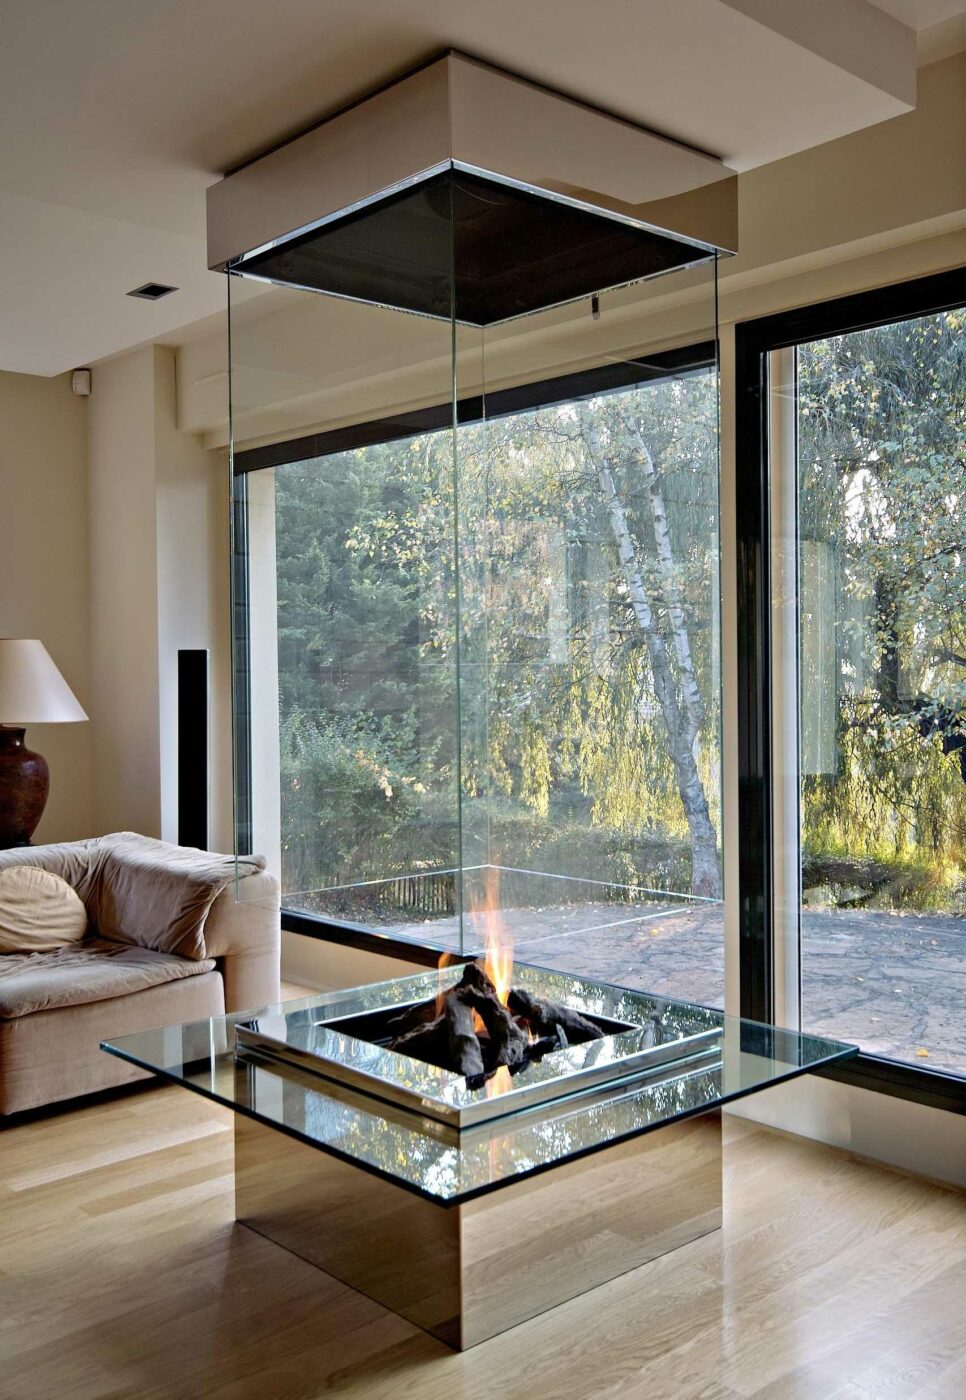 Mirrored Glass Fireplace Idea